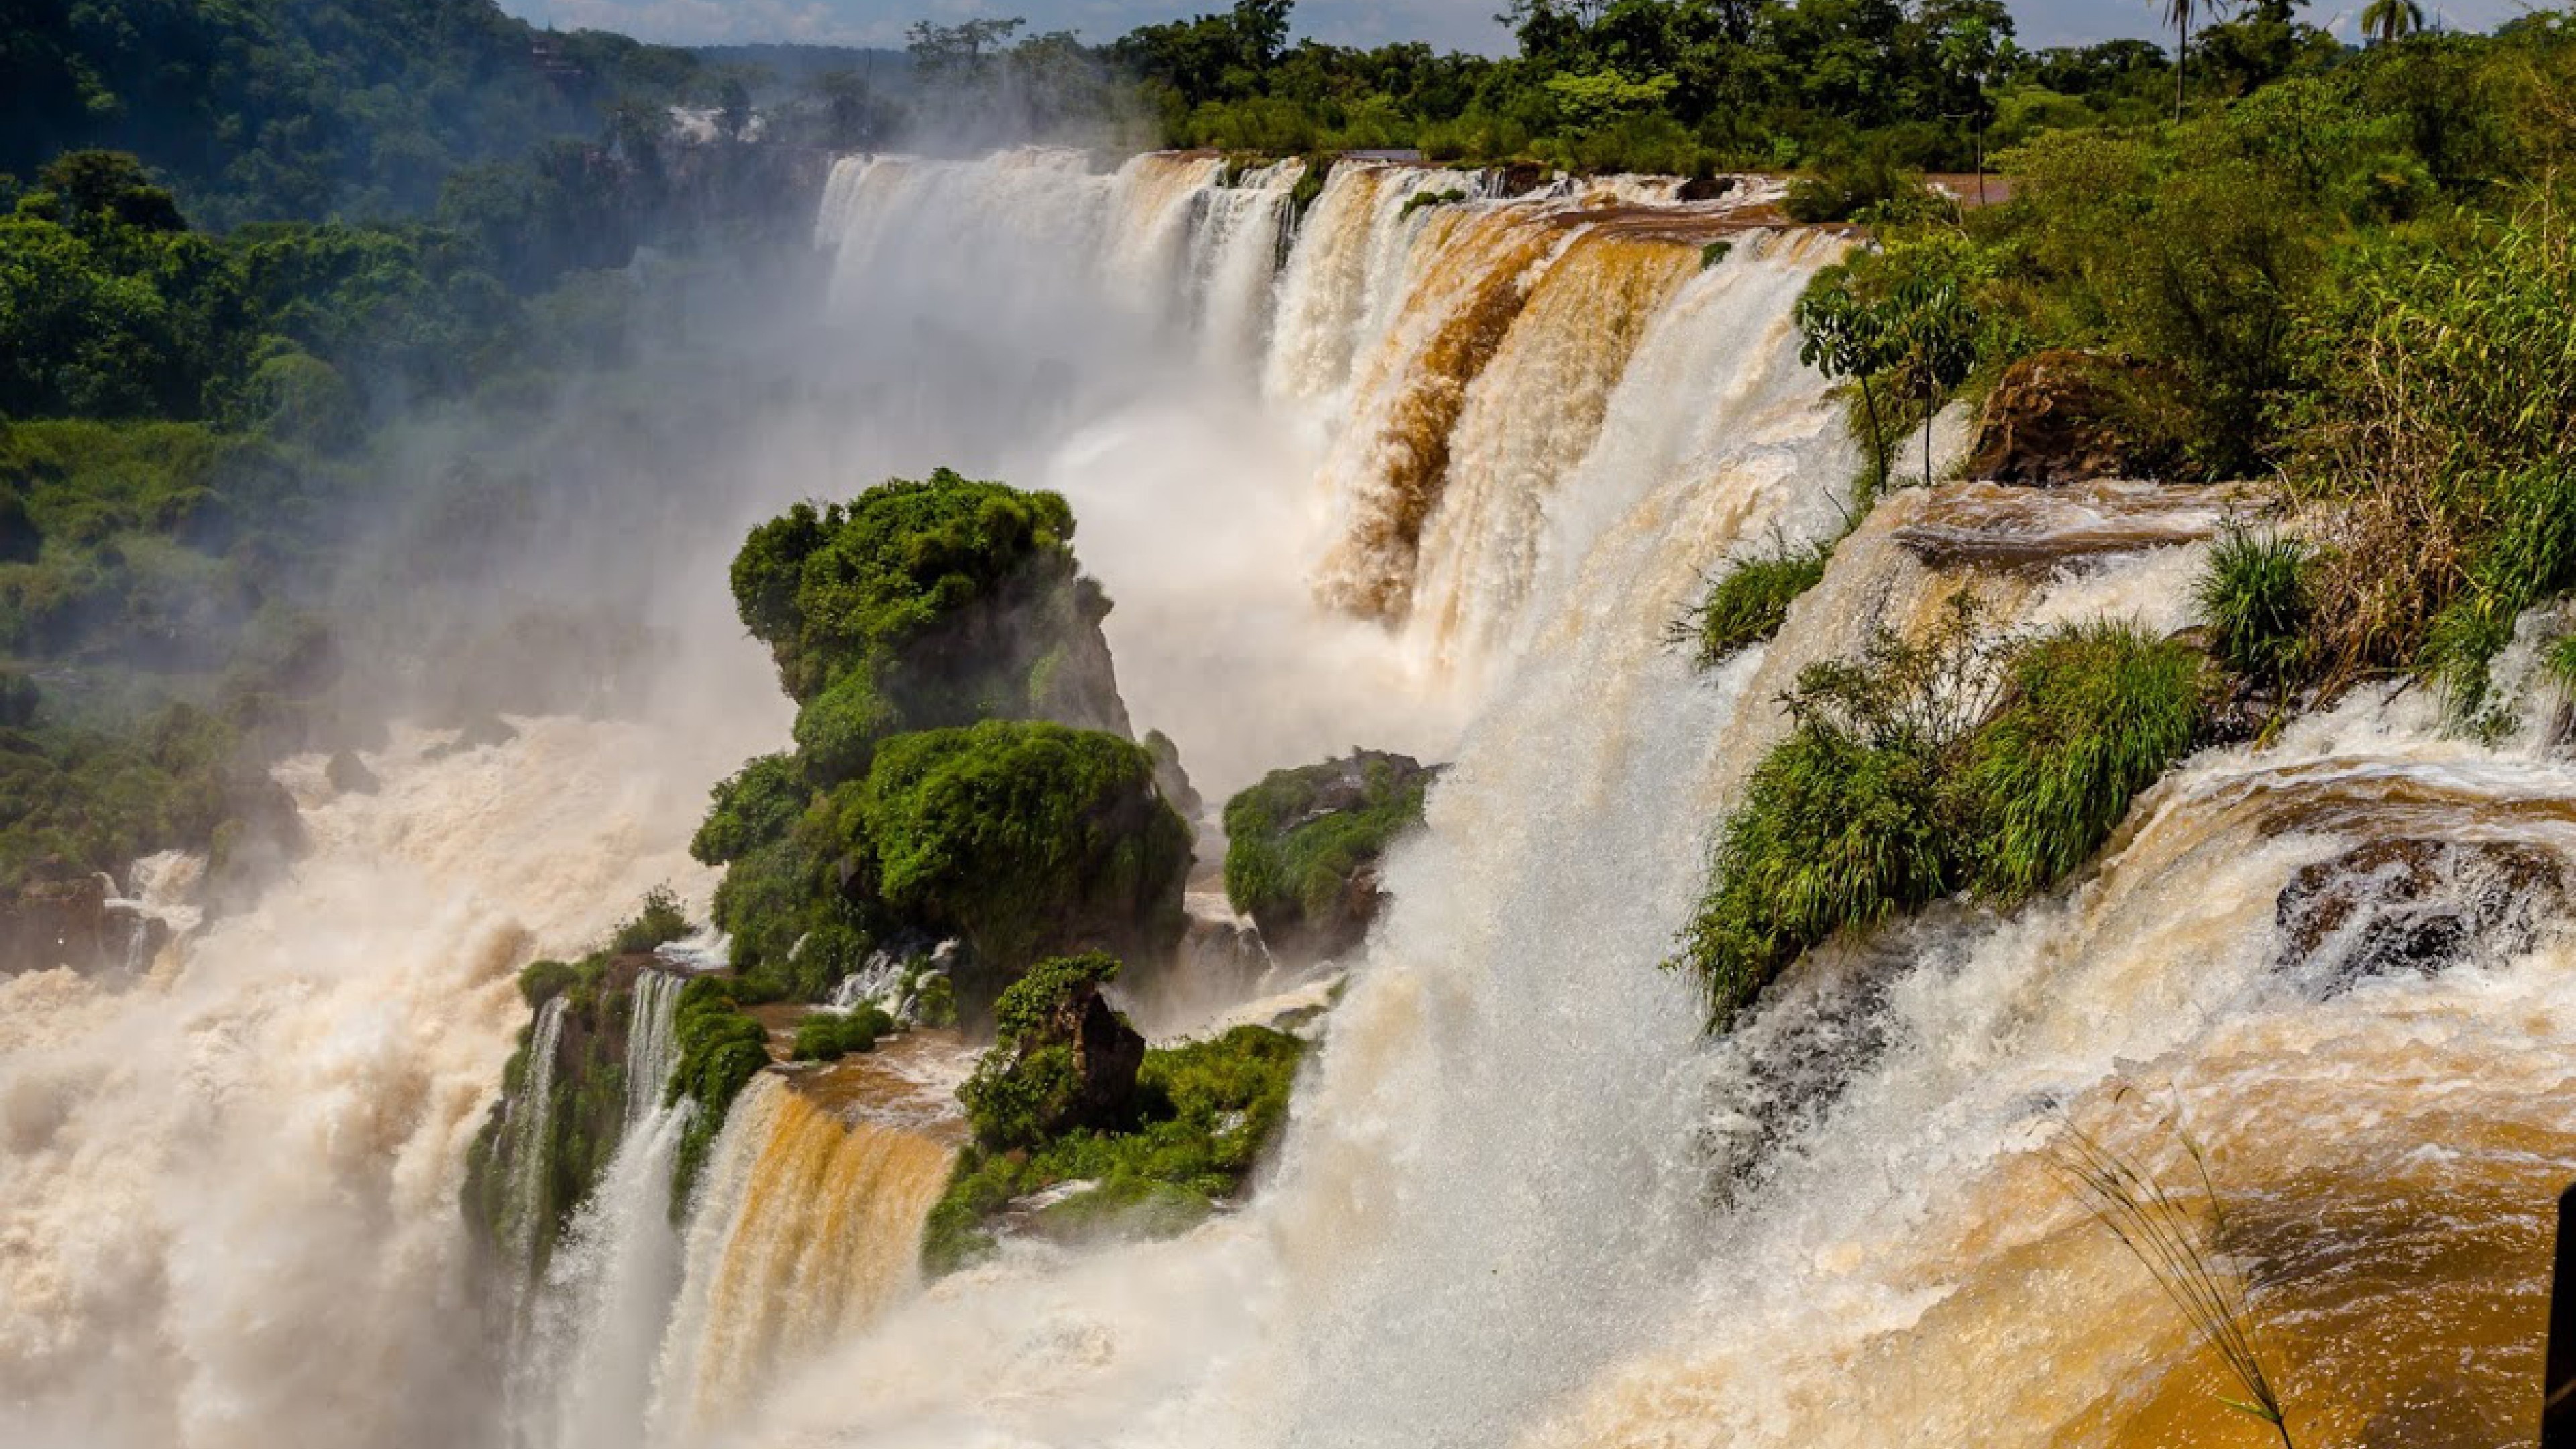 Island in the Iguazu Falls, Wallpaper, 4K resolution, Mac, 3840x2160 4K Desktop